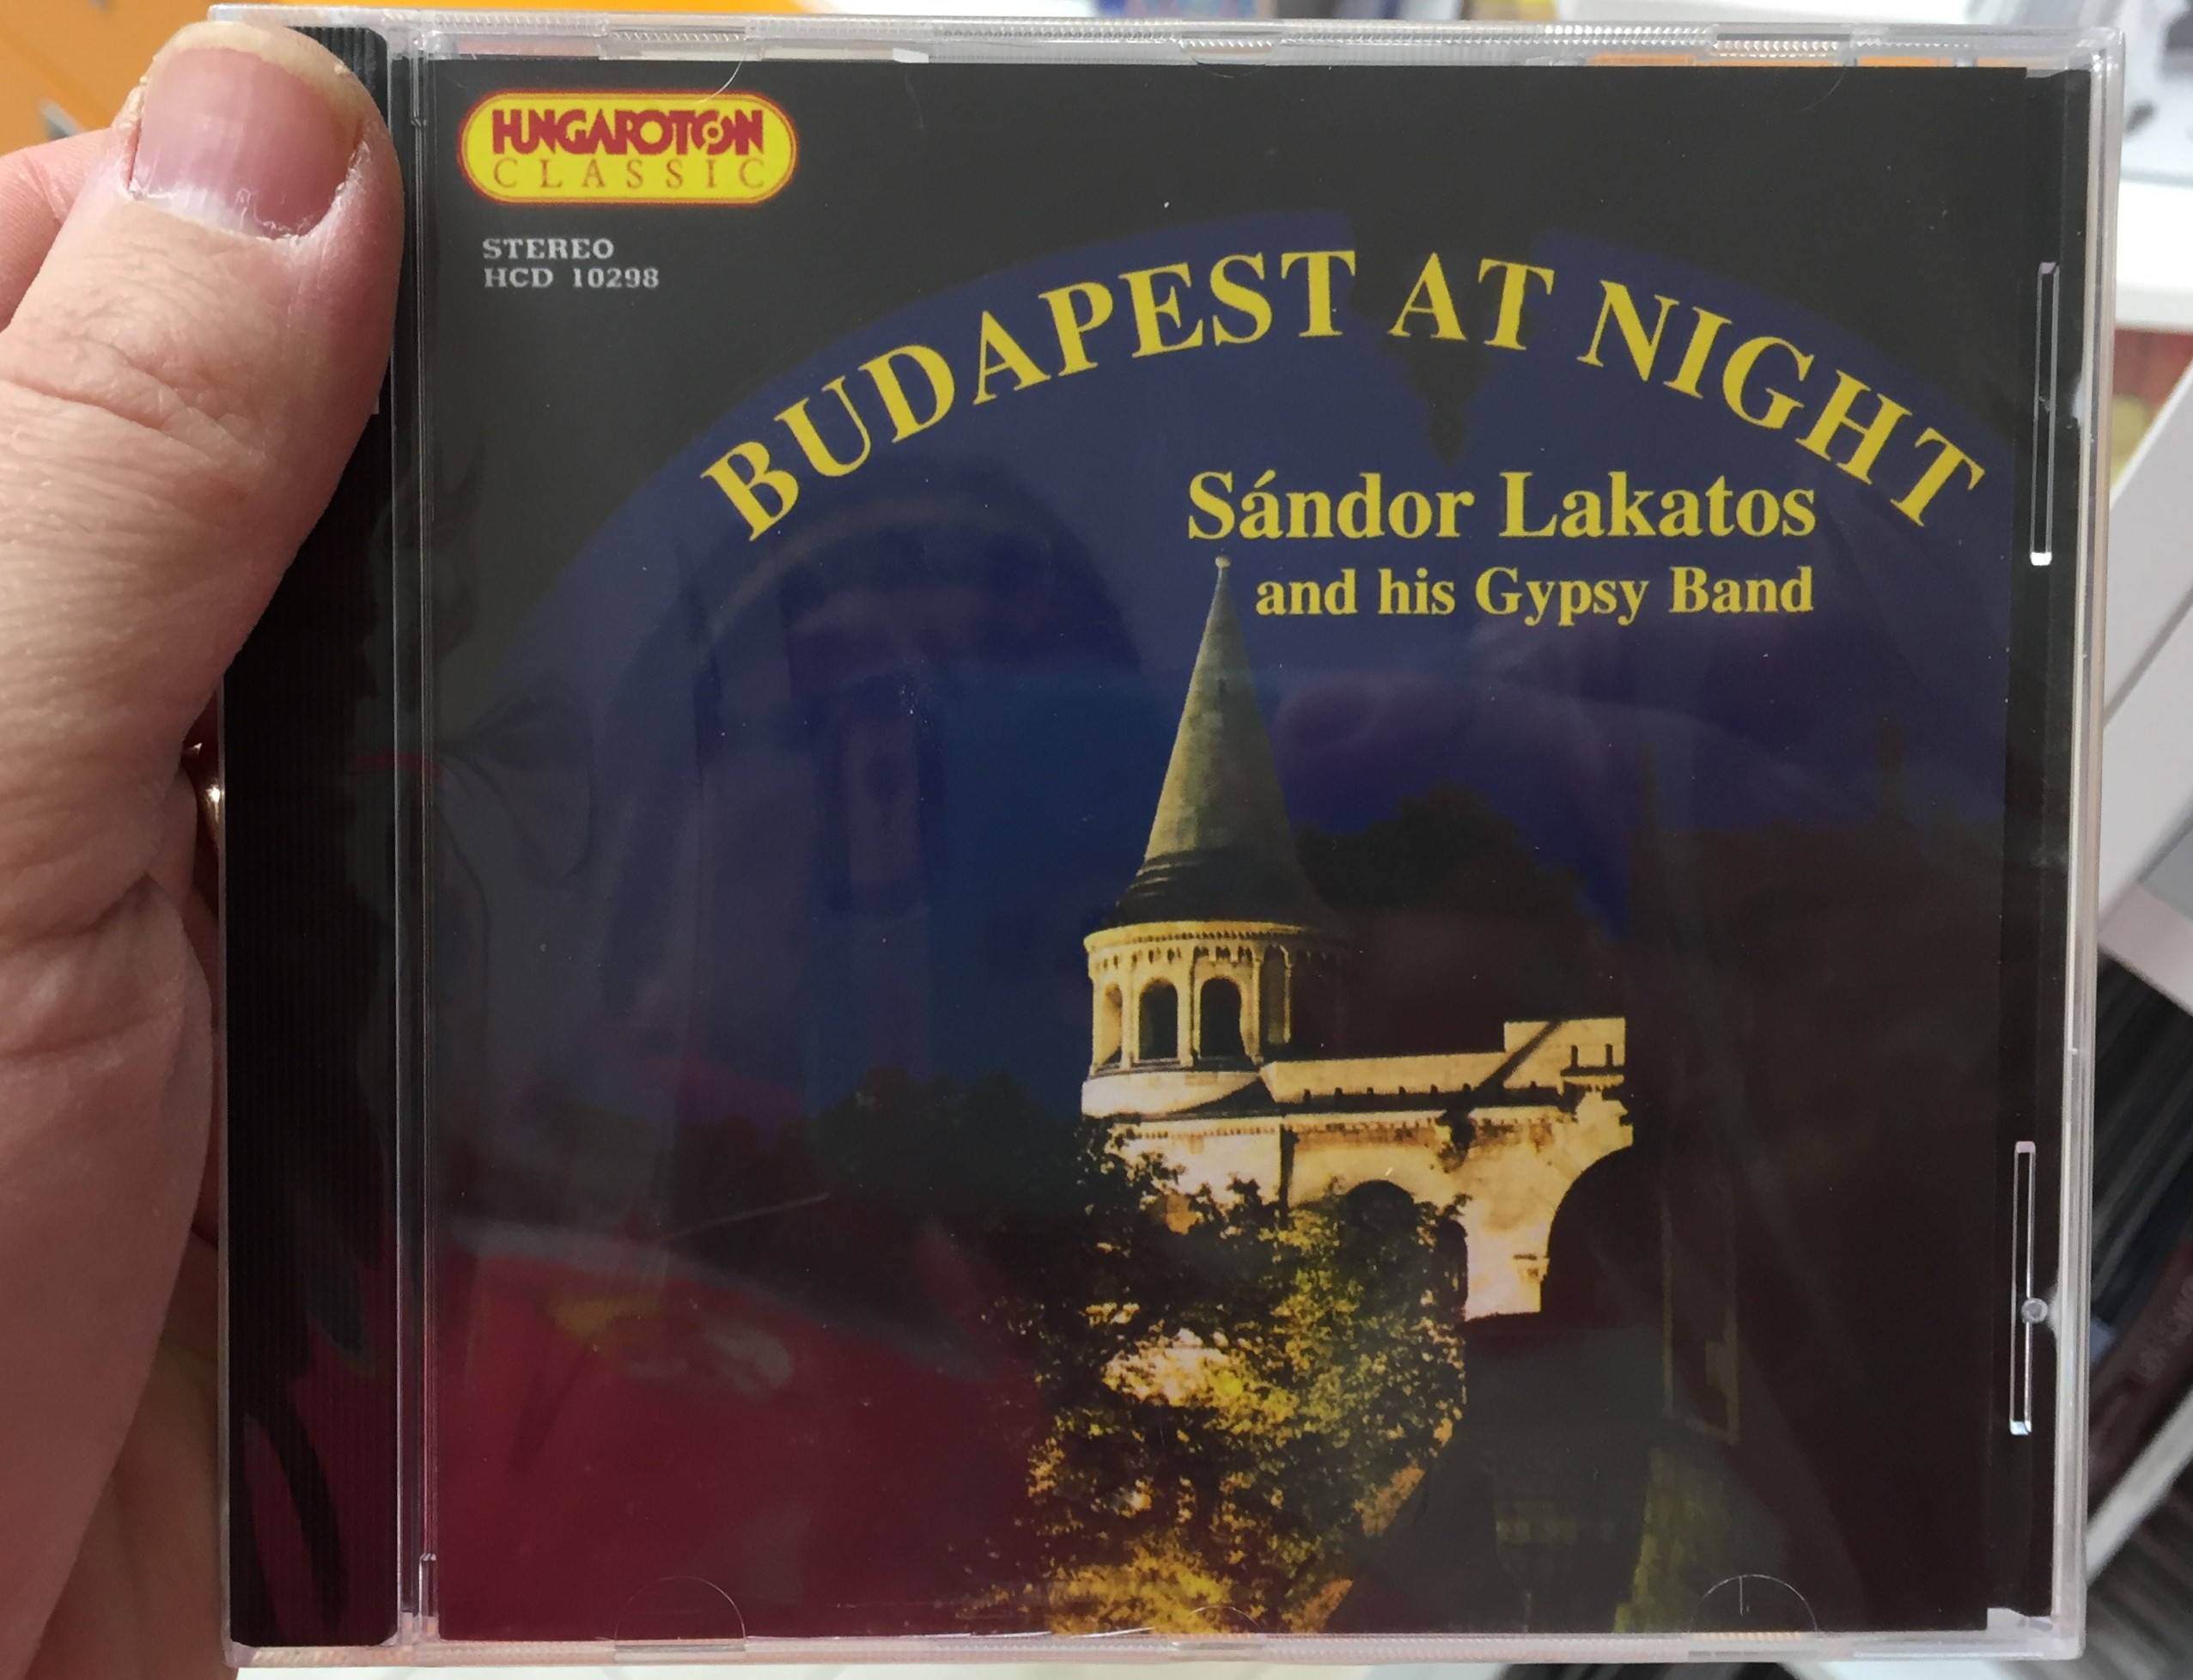 budapest-at-night-s-ndor-lakatos-and-his-gypsy-band-hungaroton-classic-audio-cd-1994-stereo-hcd-10298-1-.jpg